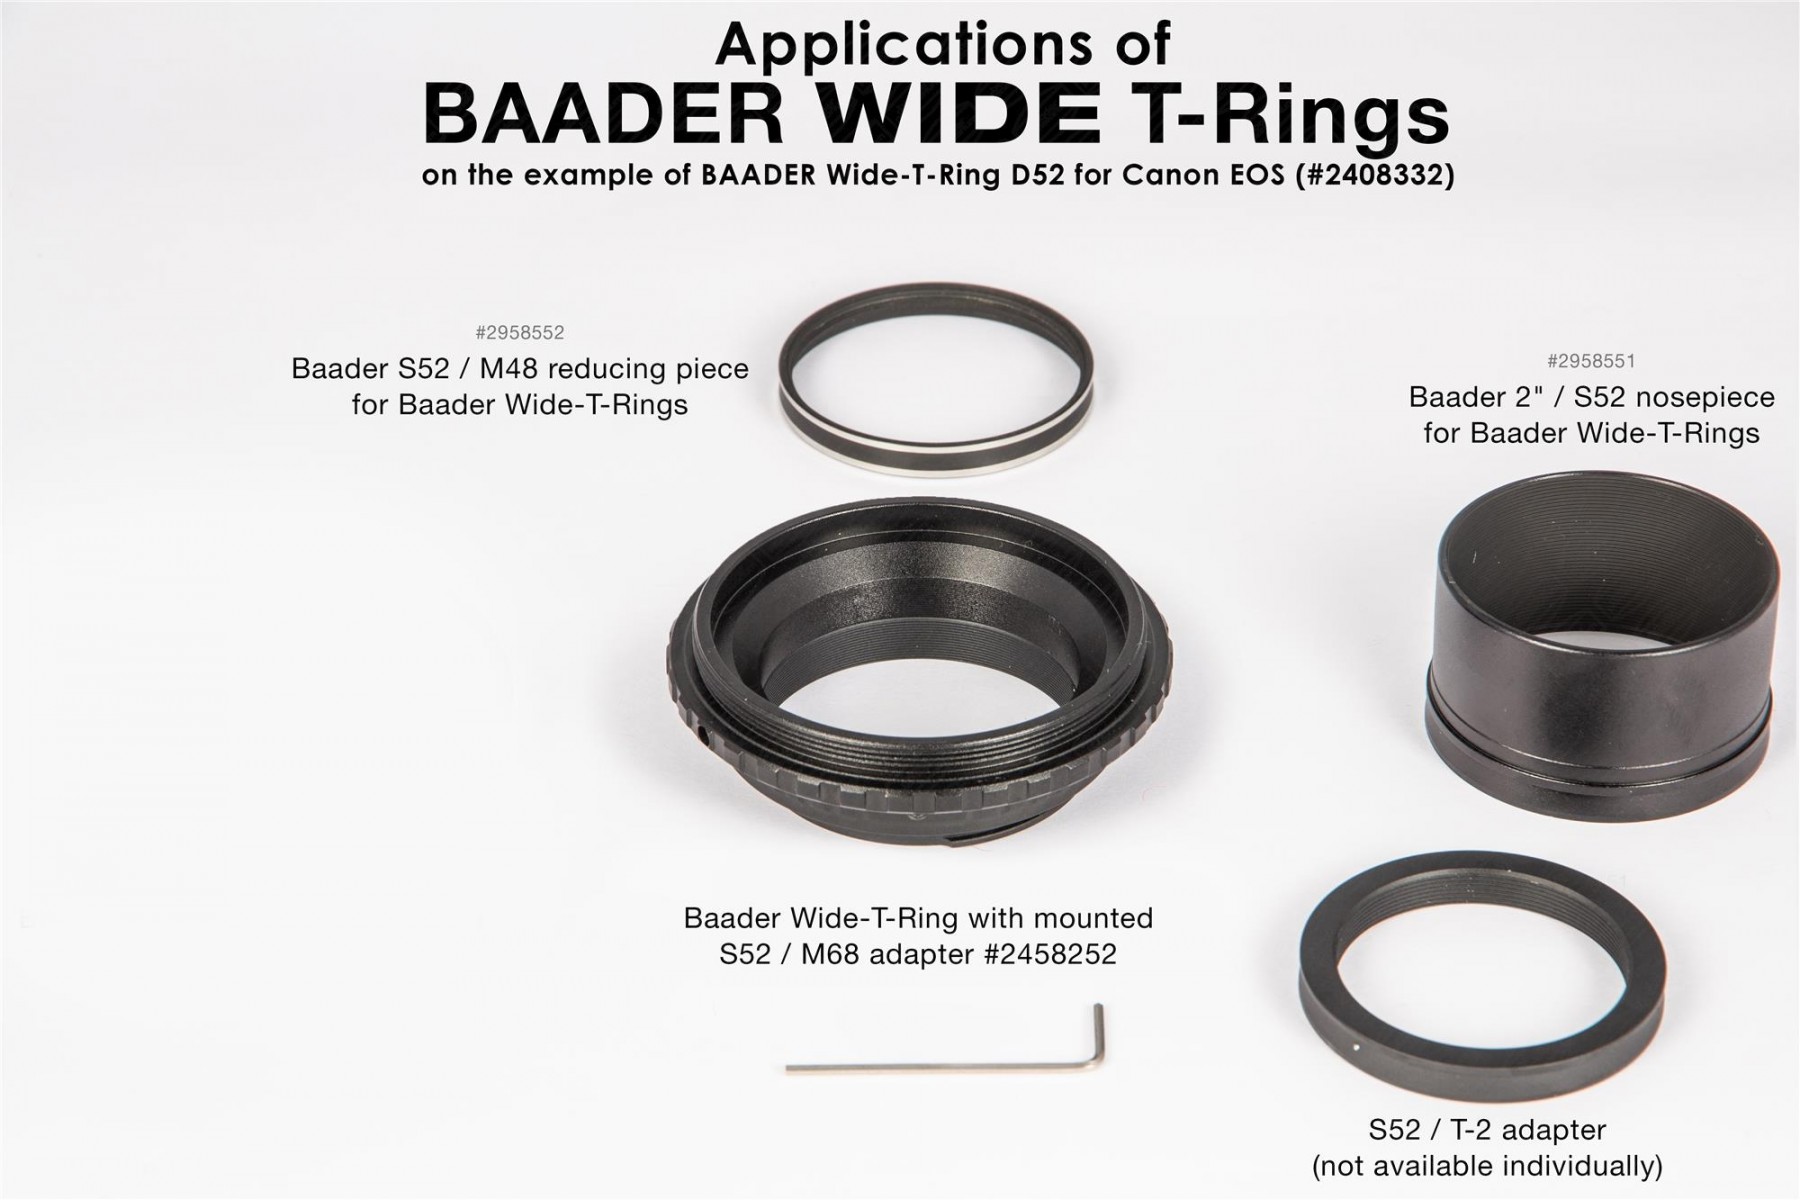 Baader T2-Ring kompatibel mit Canon EOS R/RP